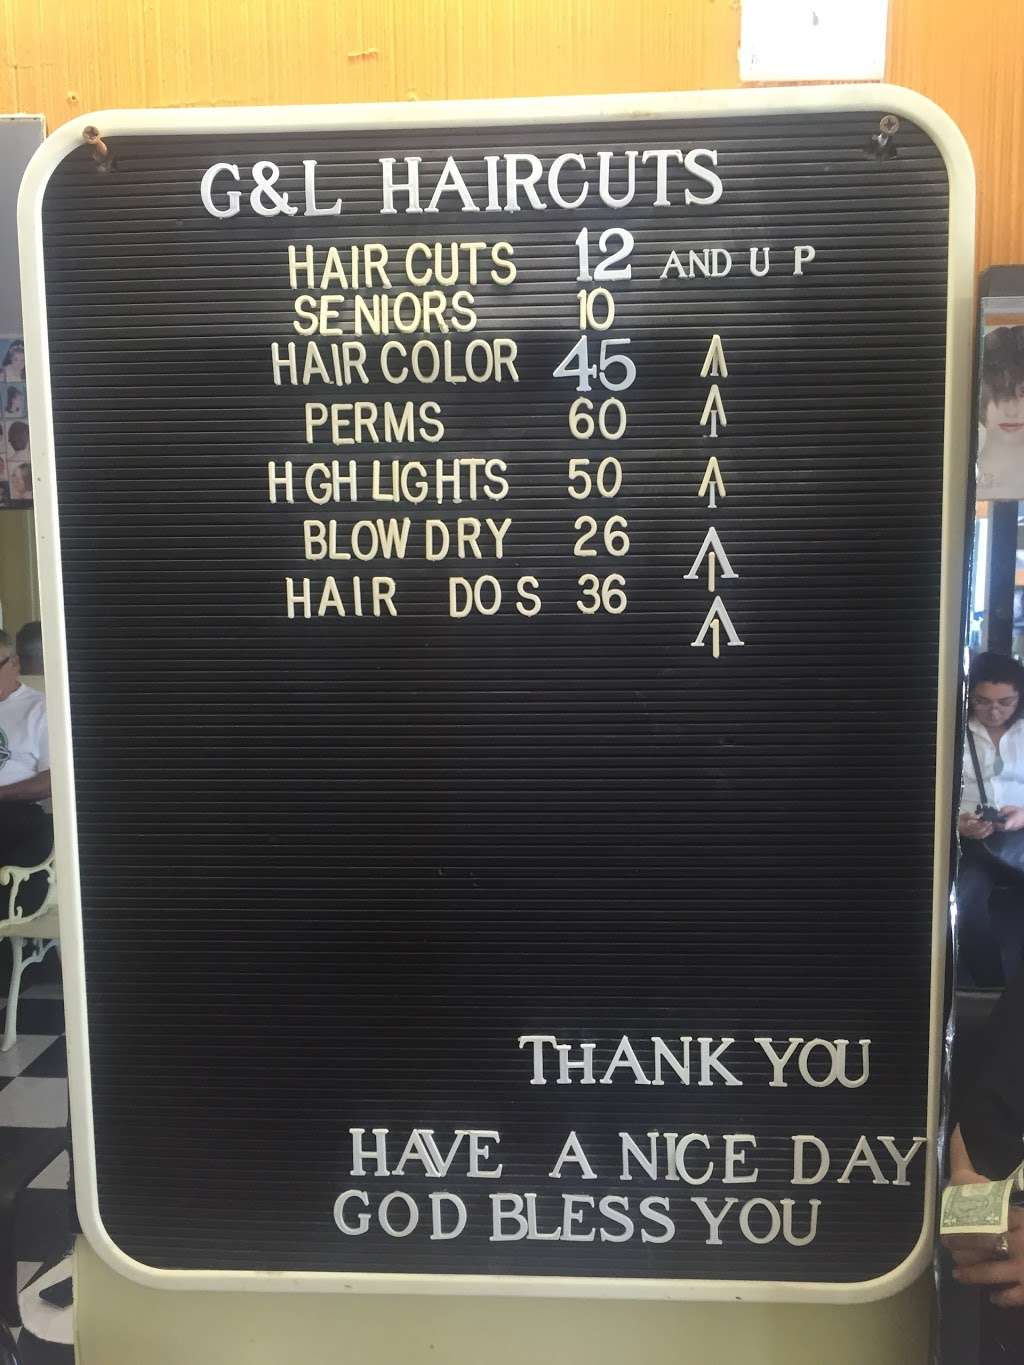 G & L Haircuts | 4022 San Pablo Dam Rd, El Sobrante, CA 94803 | Phone: (510) 222-5756